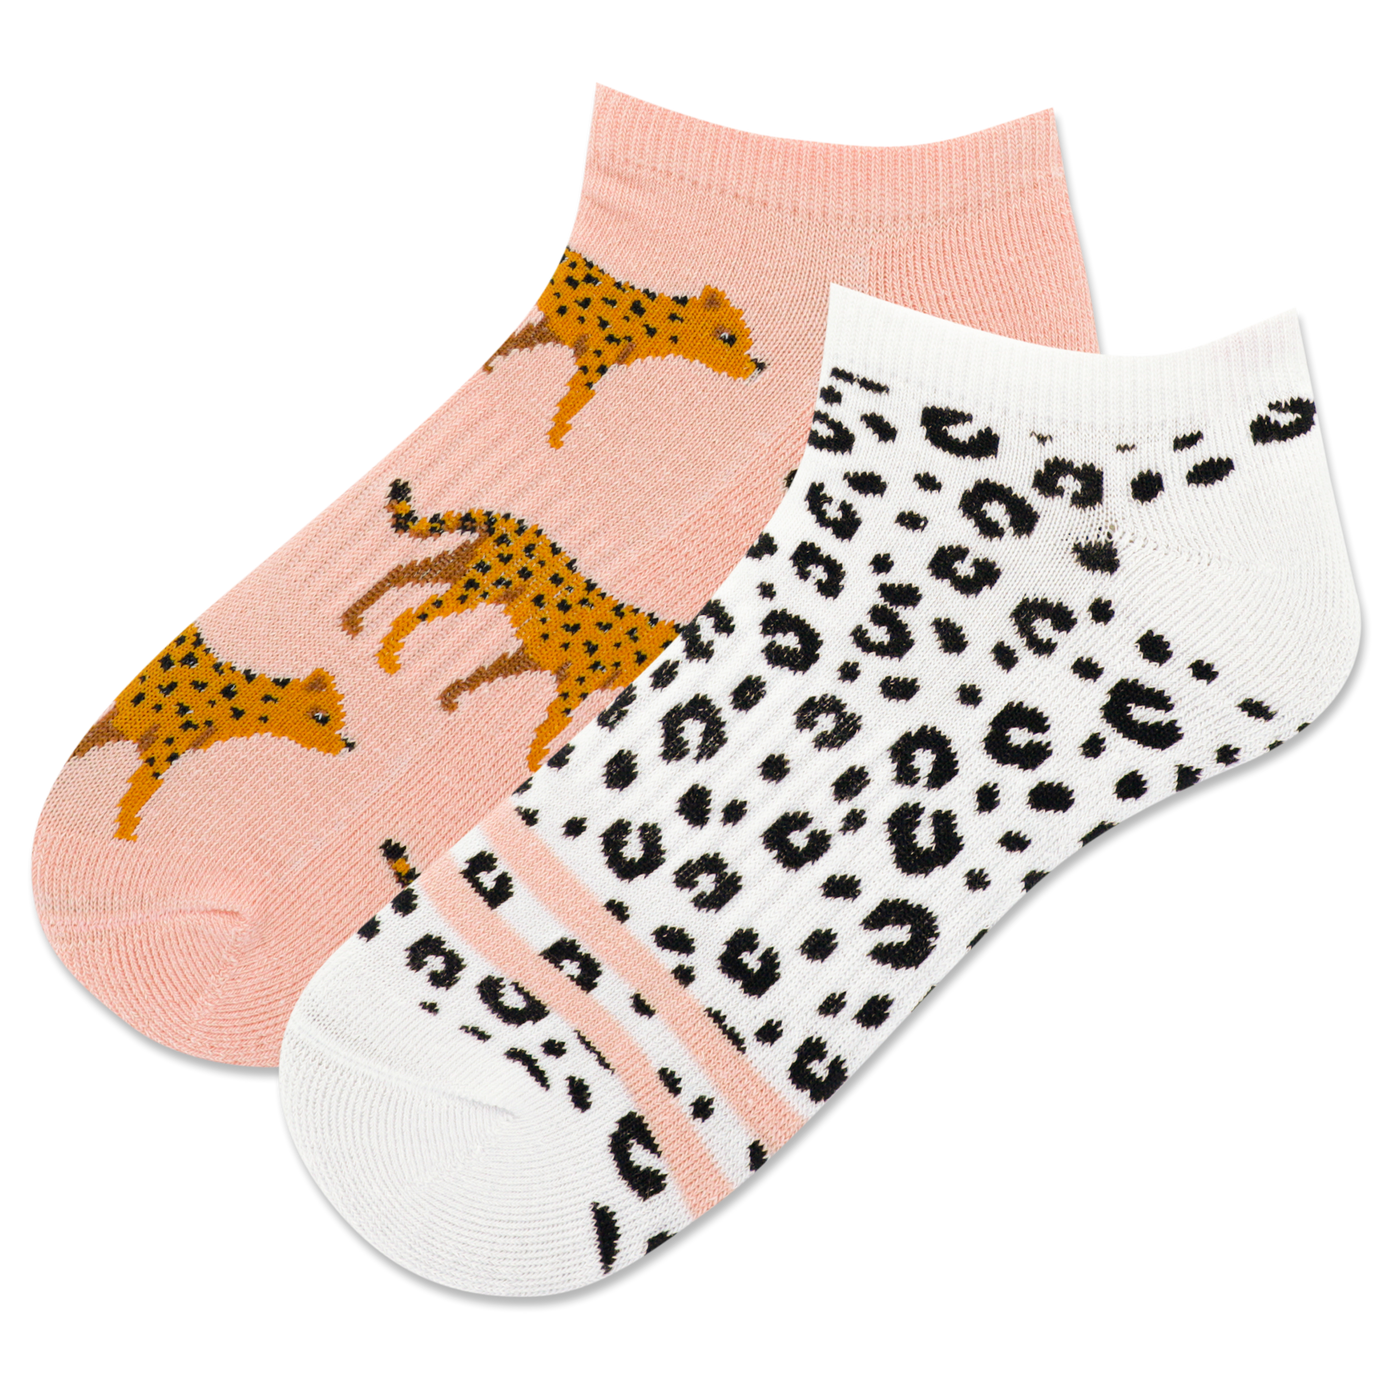 2pk animal socks with cheetahs